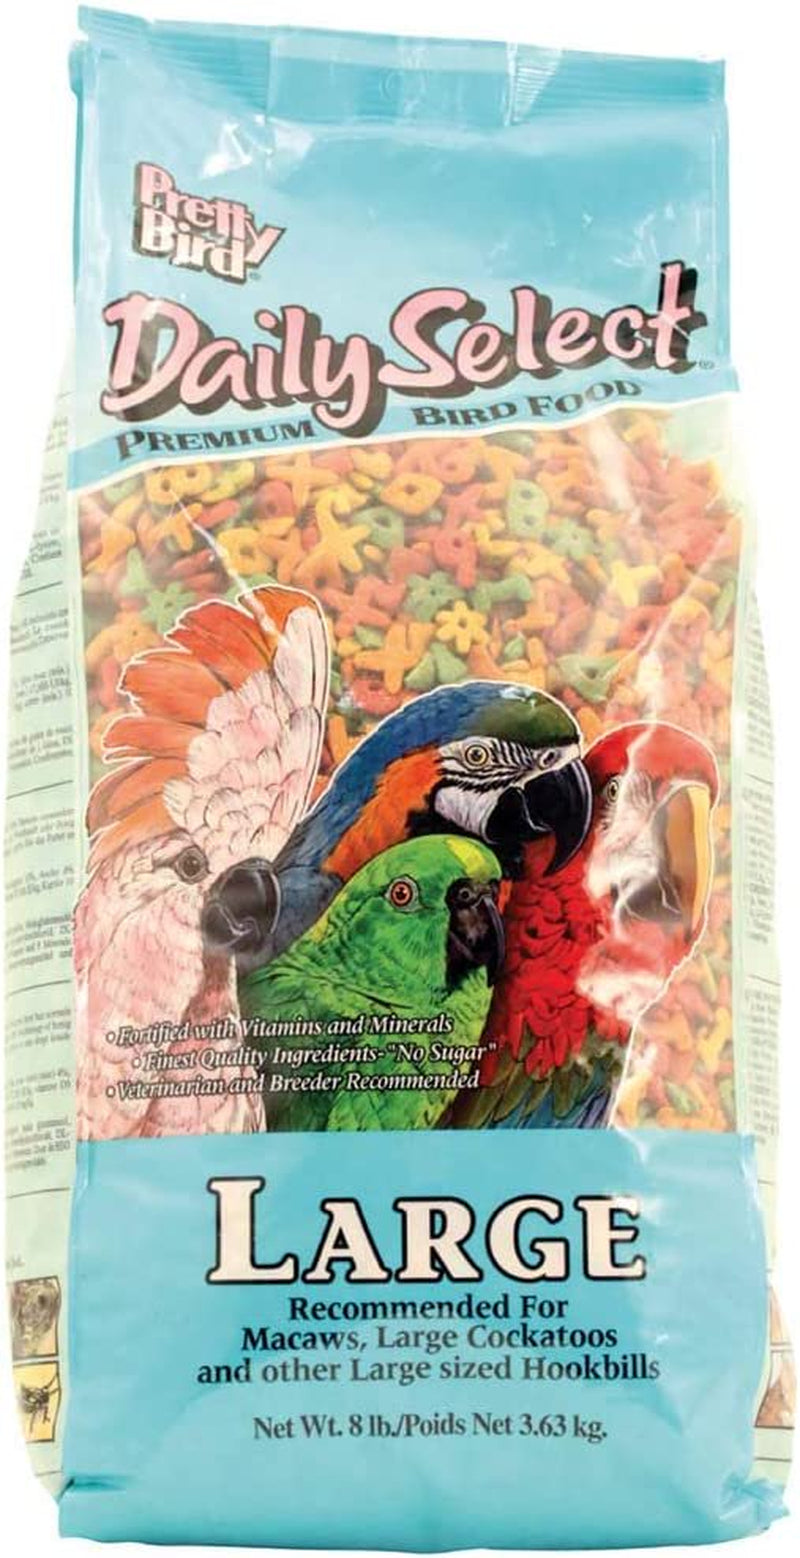 Pretty Bird International Bpb73118 3-Pound Daily Select Premium Bird Food, Large